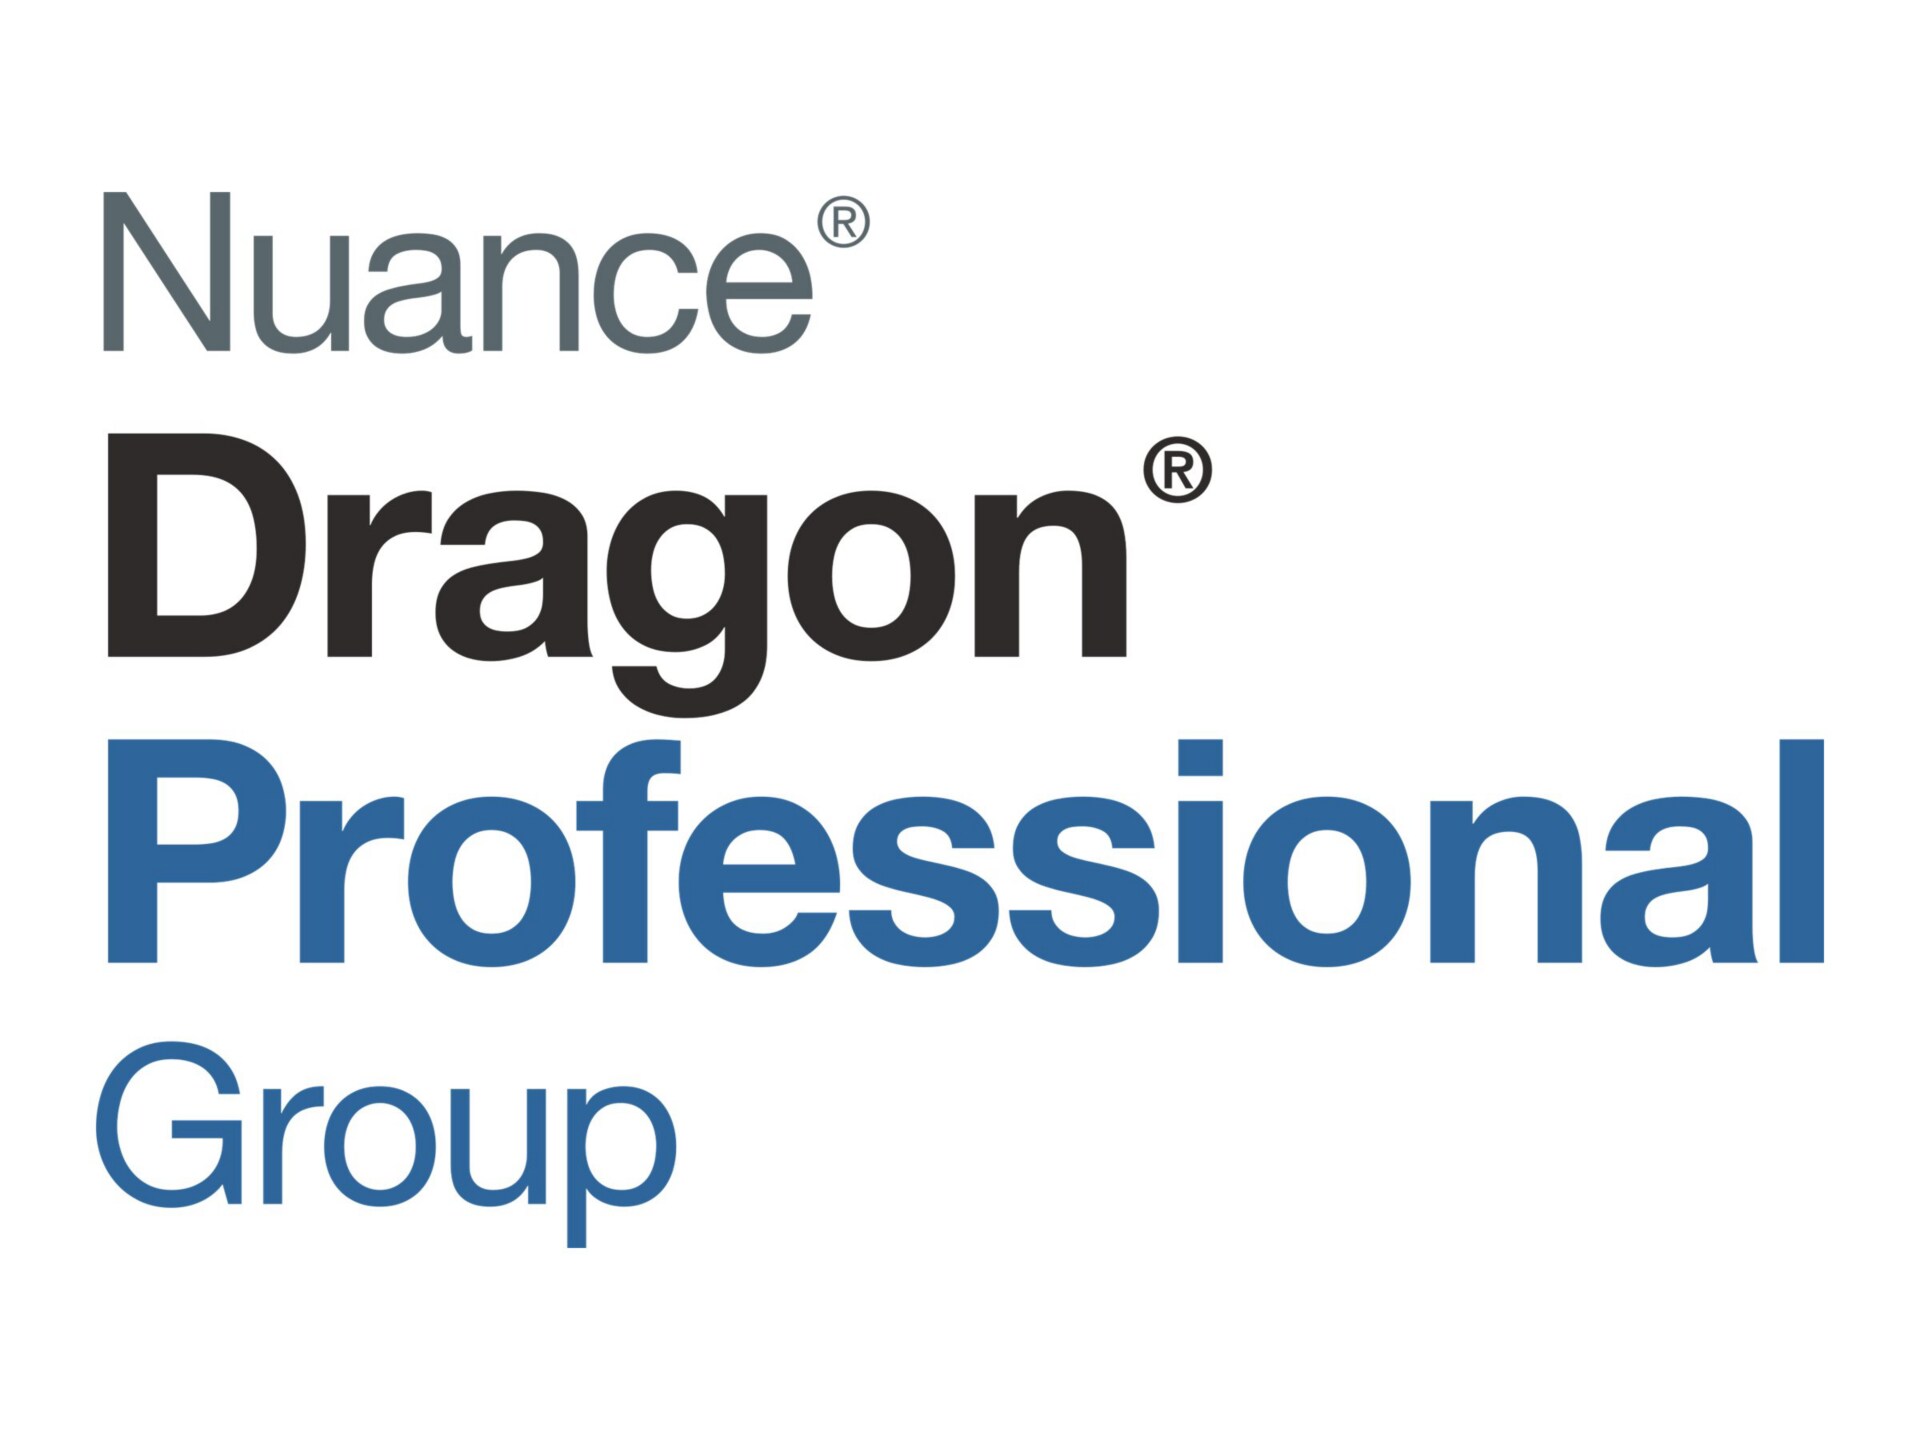 Dragon Professional Group (v. 15) - upgrade license - 1 user